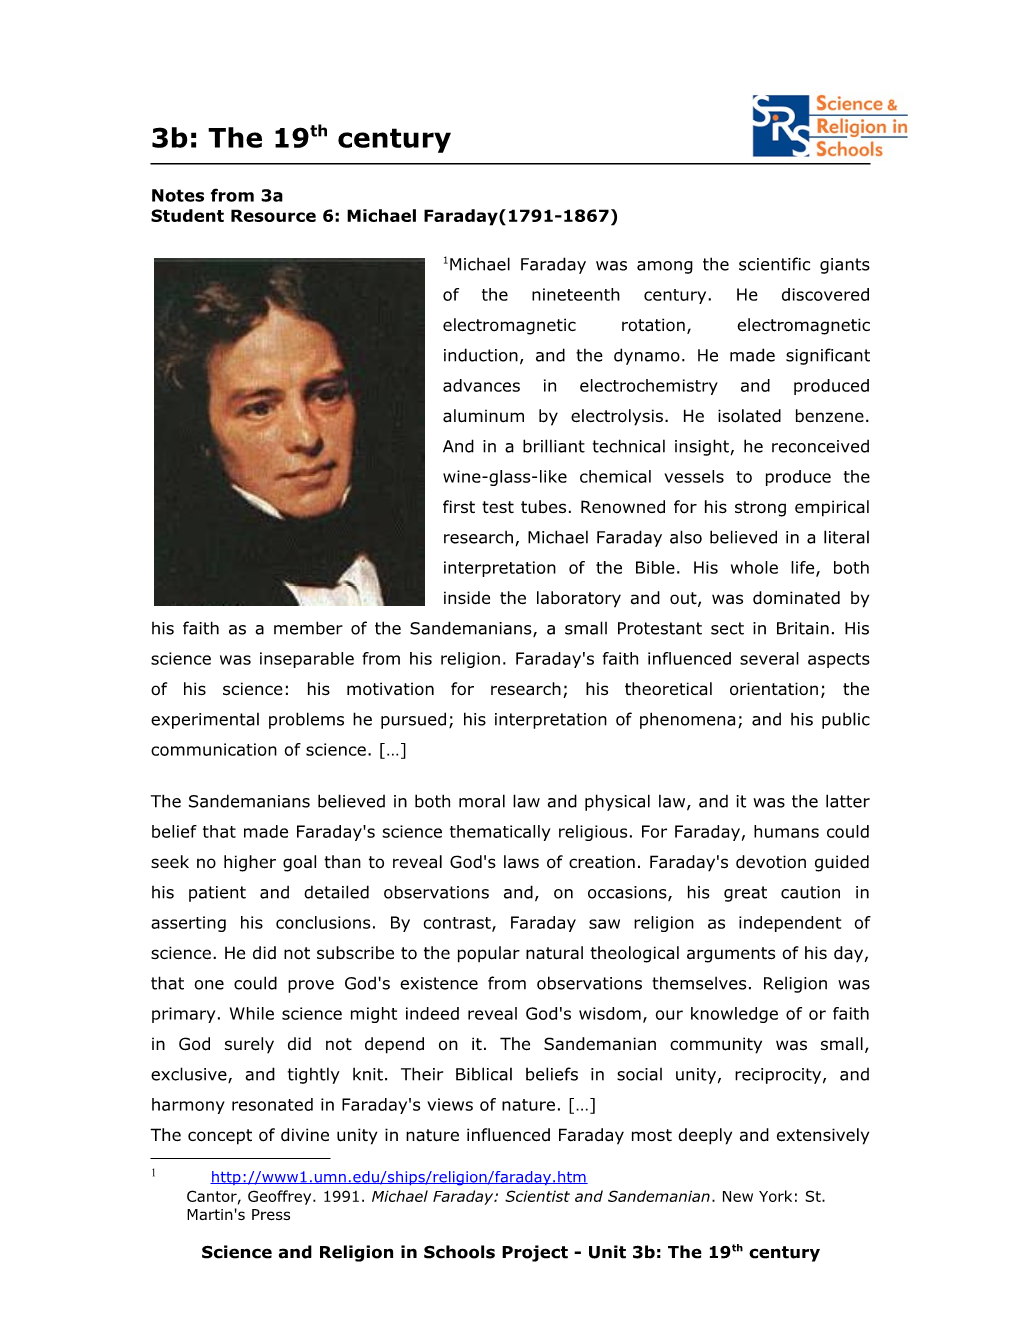 Student Resource 6: Michael Faraday(1791-1867)